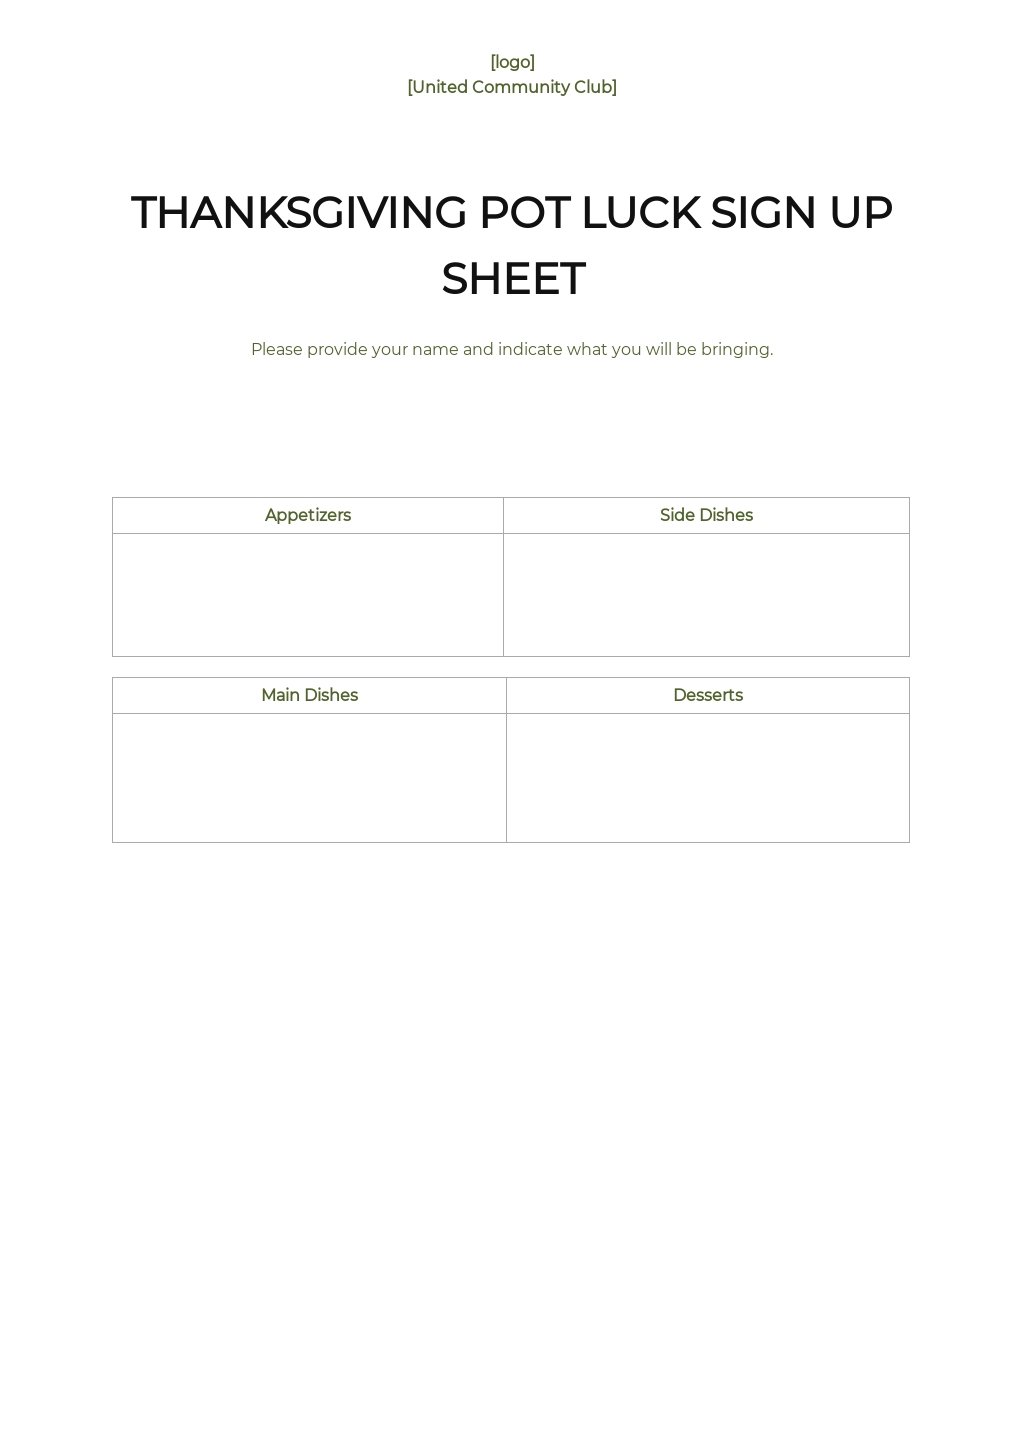 Thanksgiving Sign Up Sheet Template